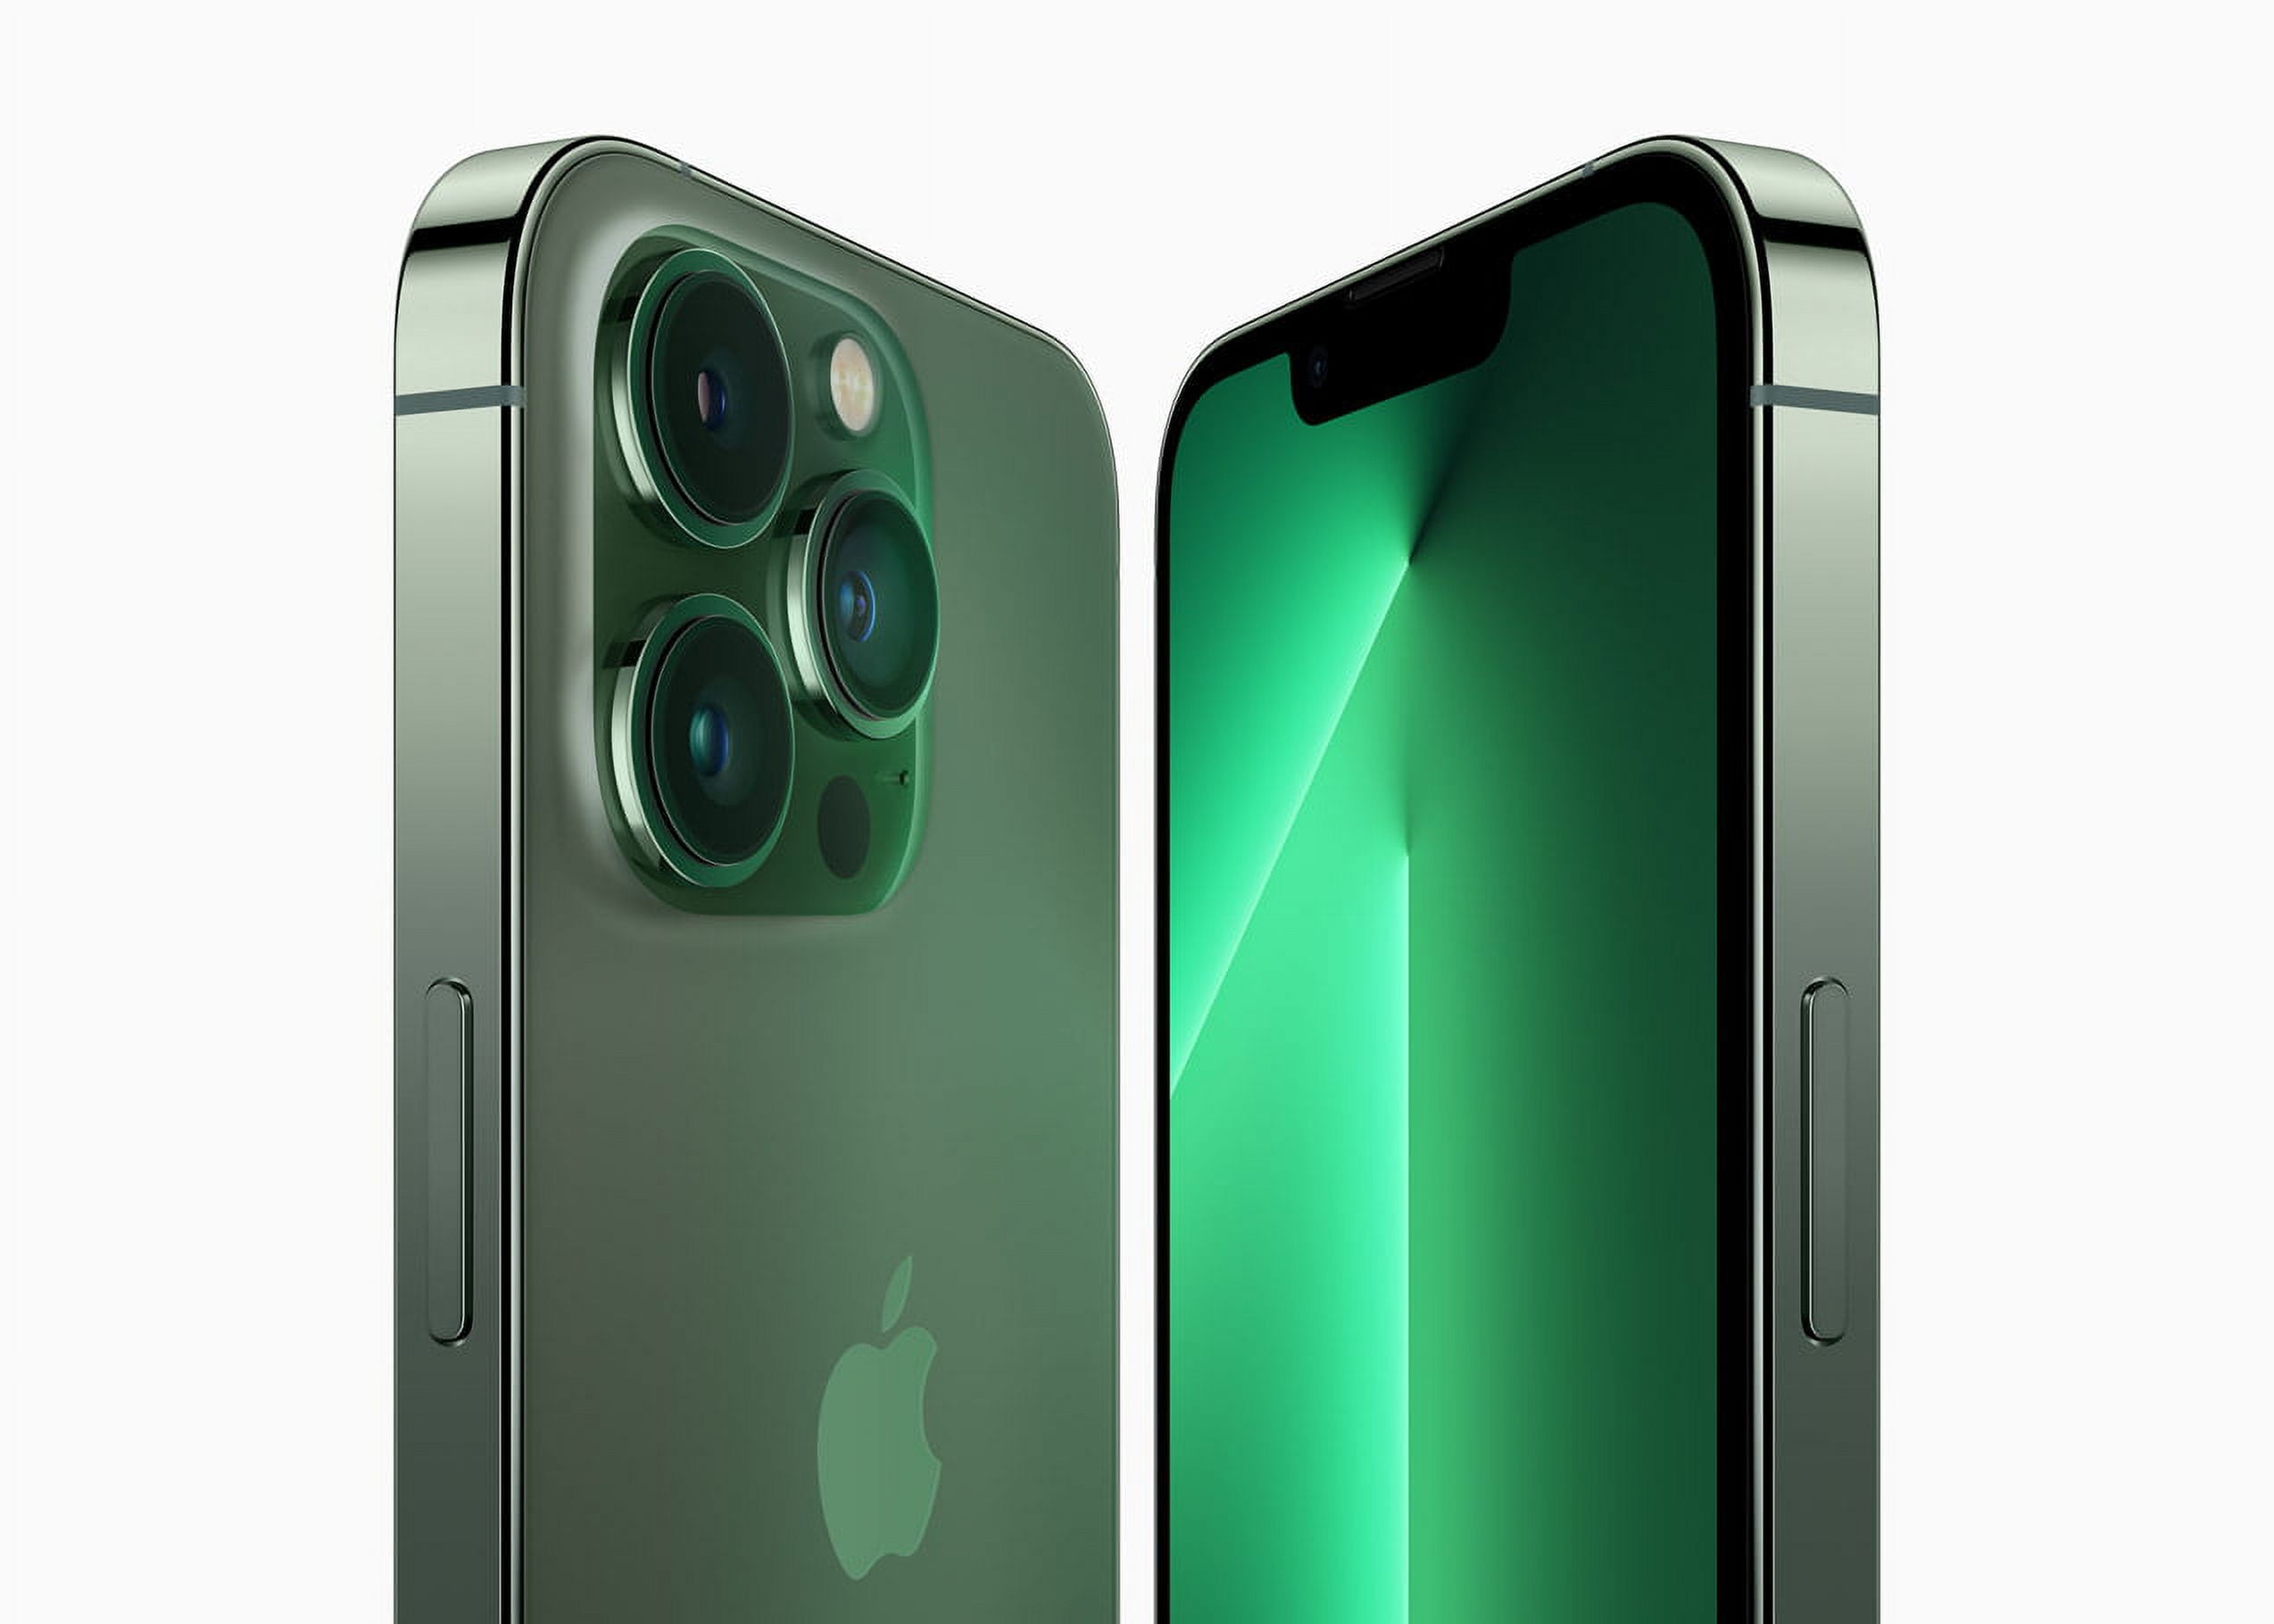 Refurbished iPhone 13 Pro Max 256GB - Alpine Green (Unlocked) - Apple